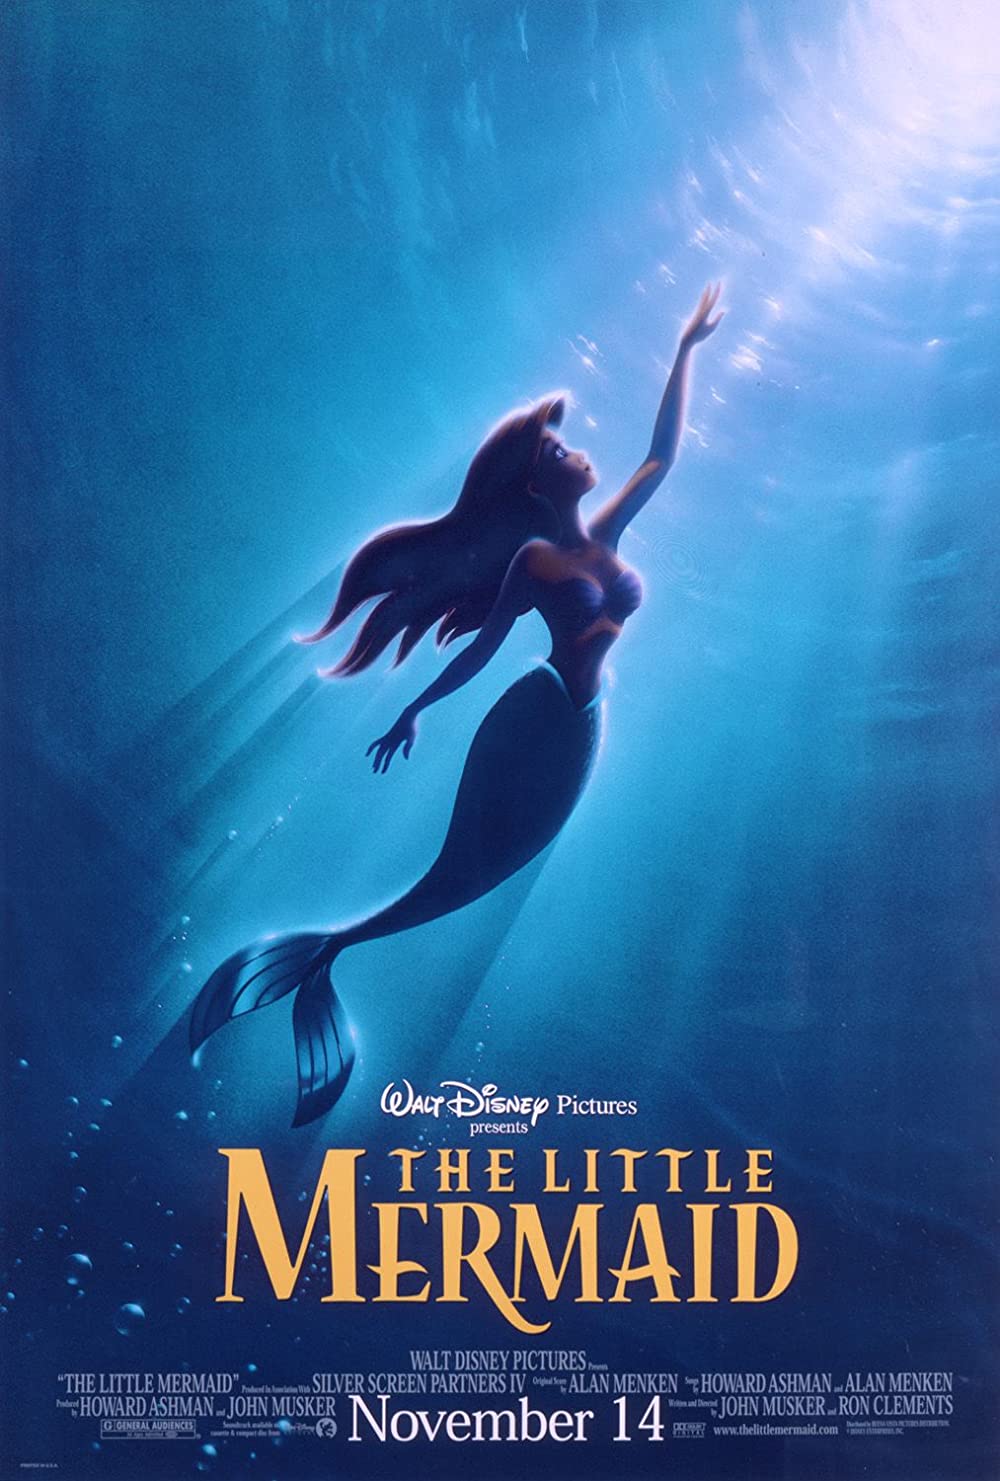 Filmbeschreibung zu The Little Mermaid